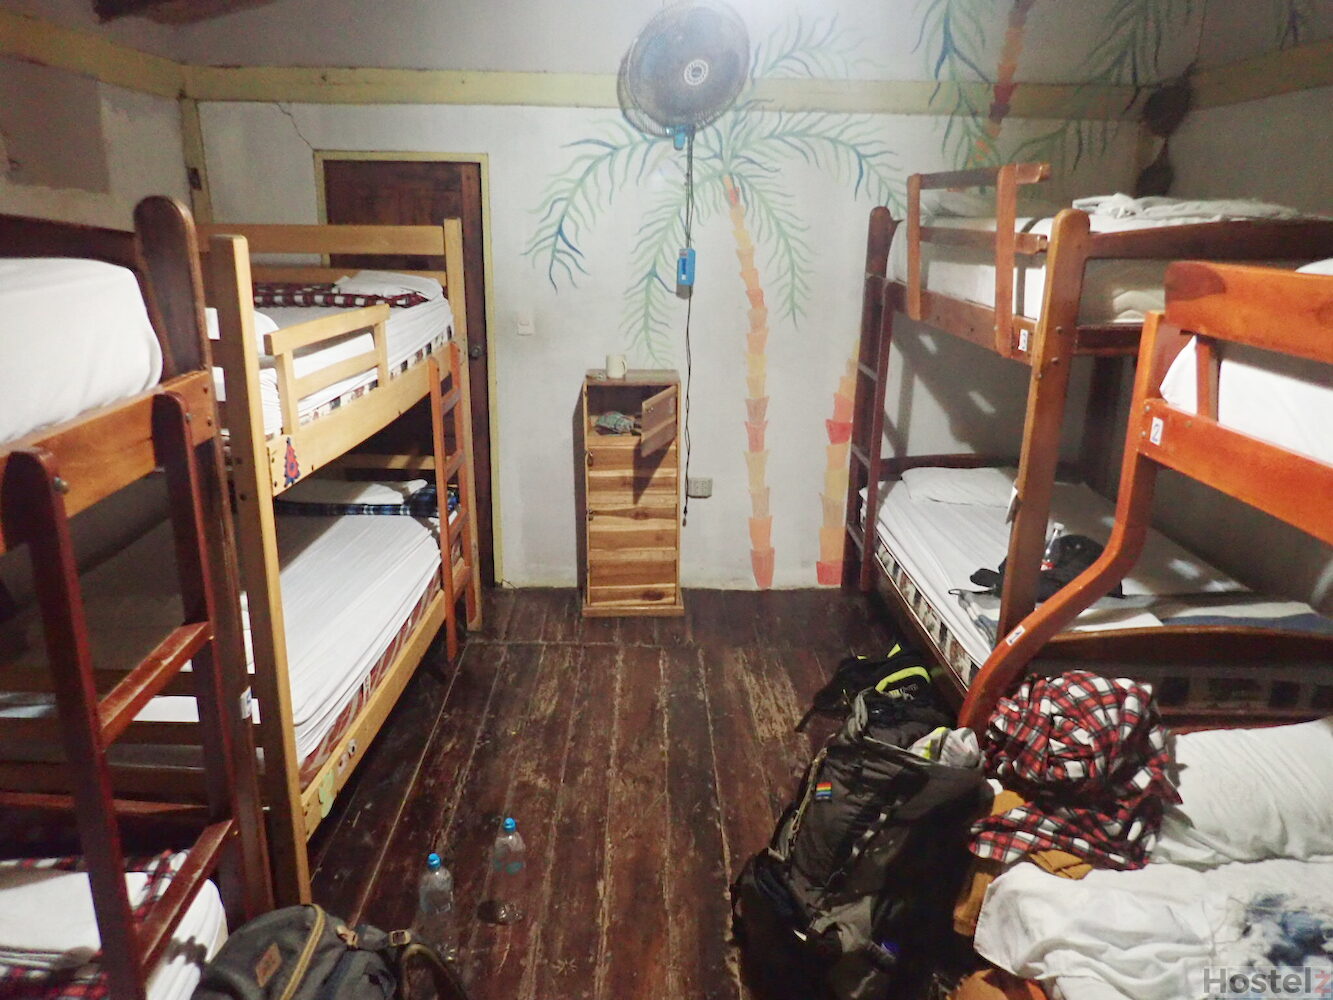 The cheapest dorm room